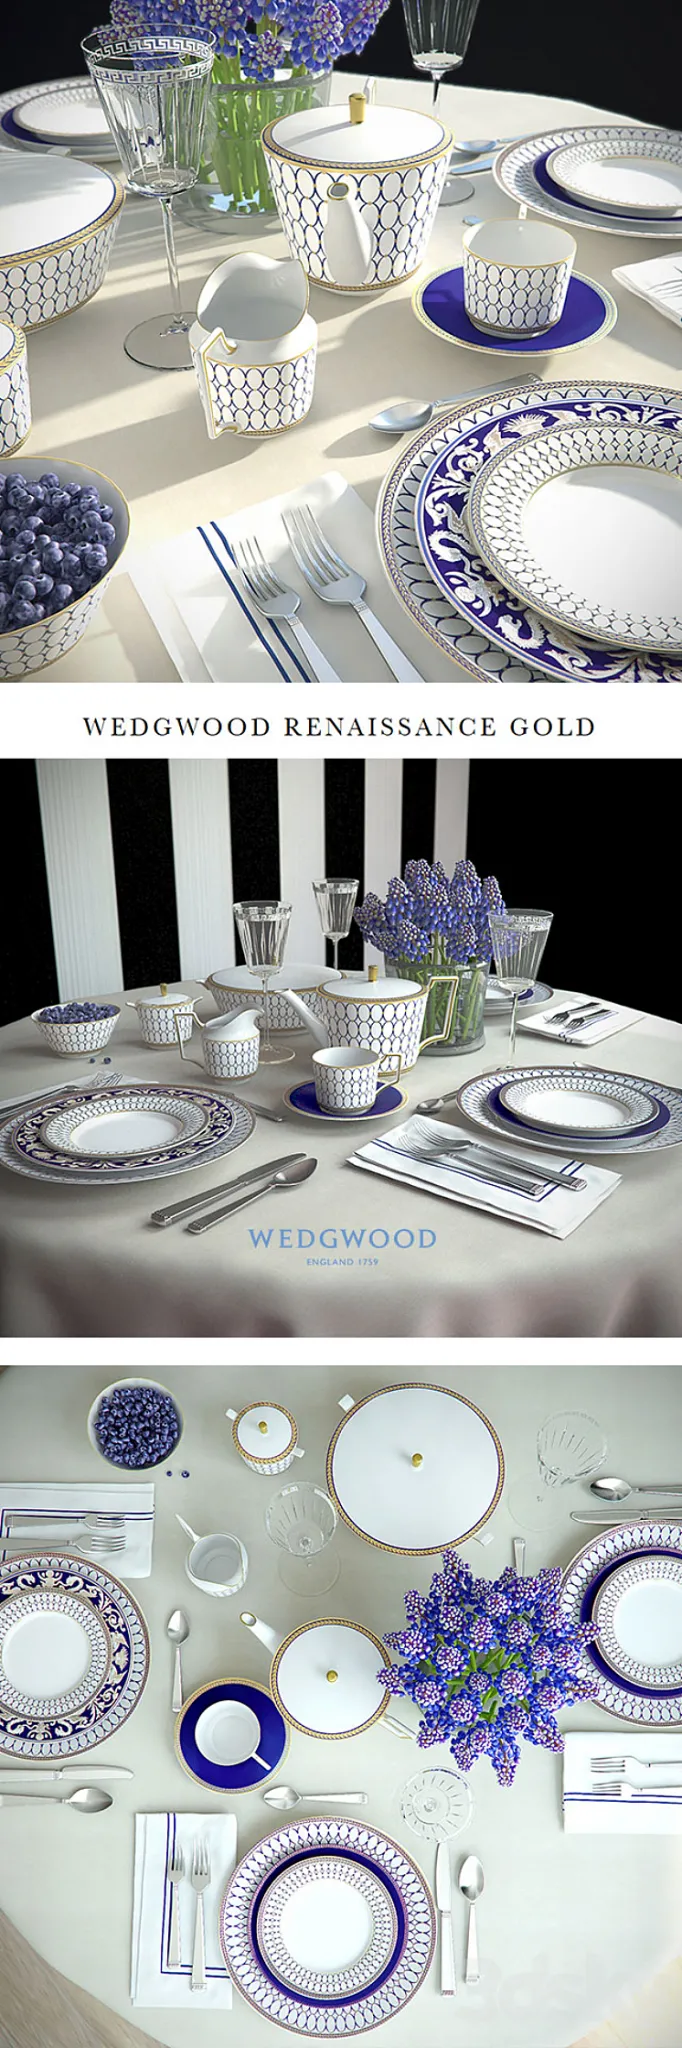 Wedgwood Renaissance Gold – Serving 3DS Max